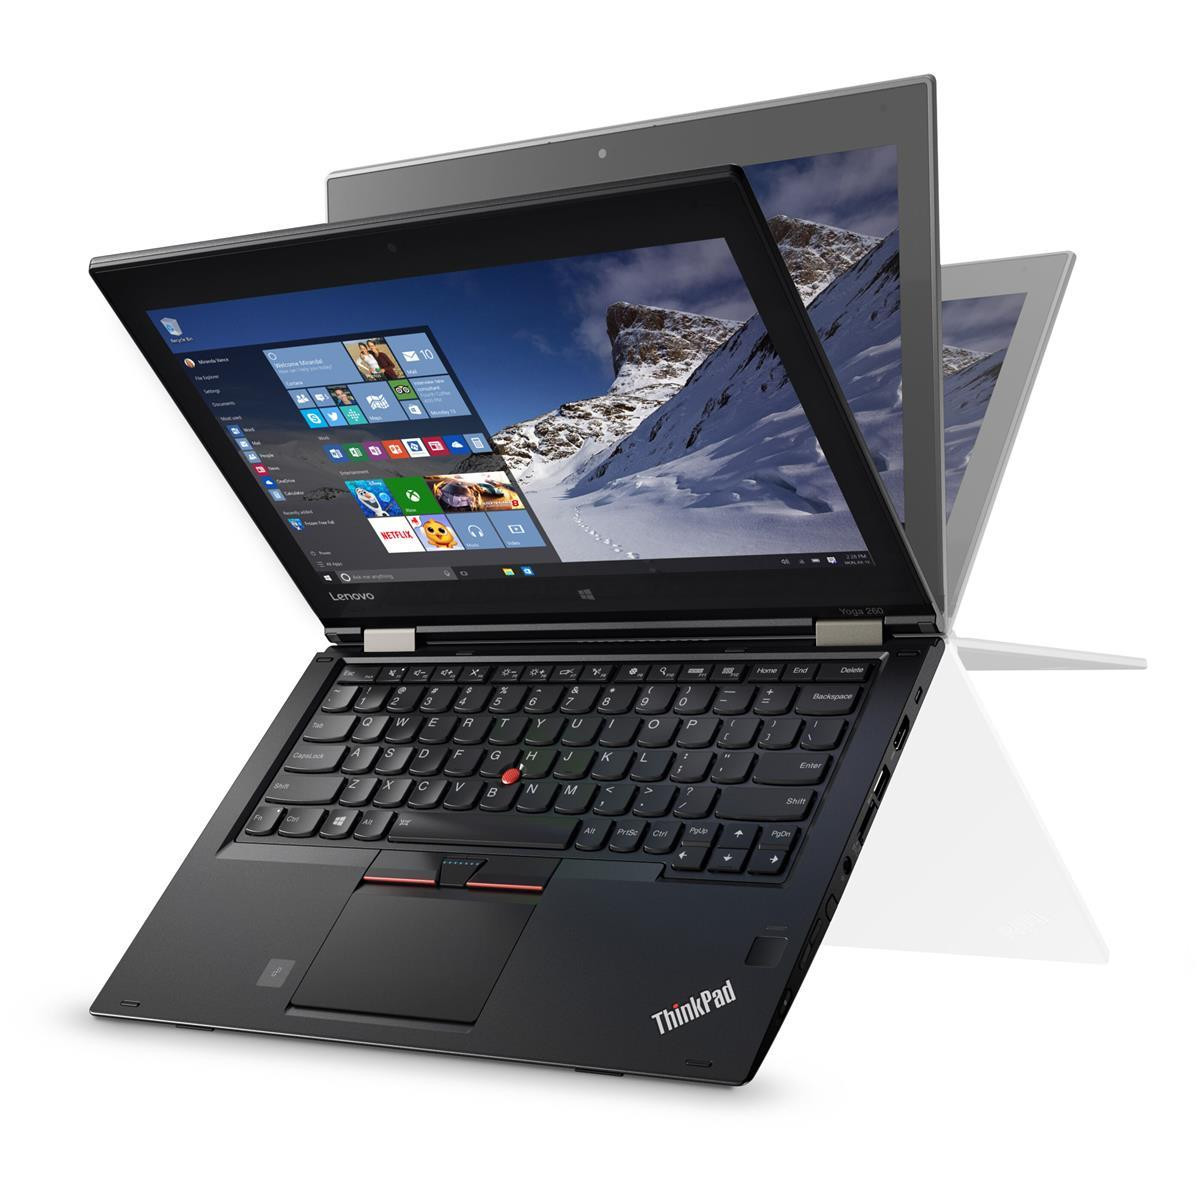 Lenovo ThinkPad Yoga 260 Intel i7-6500U 8GB 256GB SSD FHD W10P WLAN Touchscreen